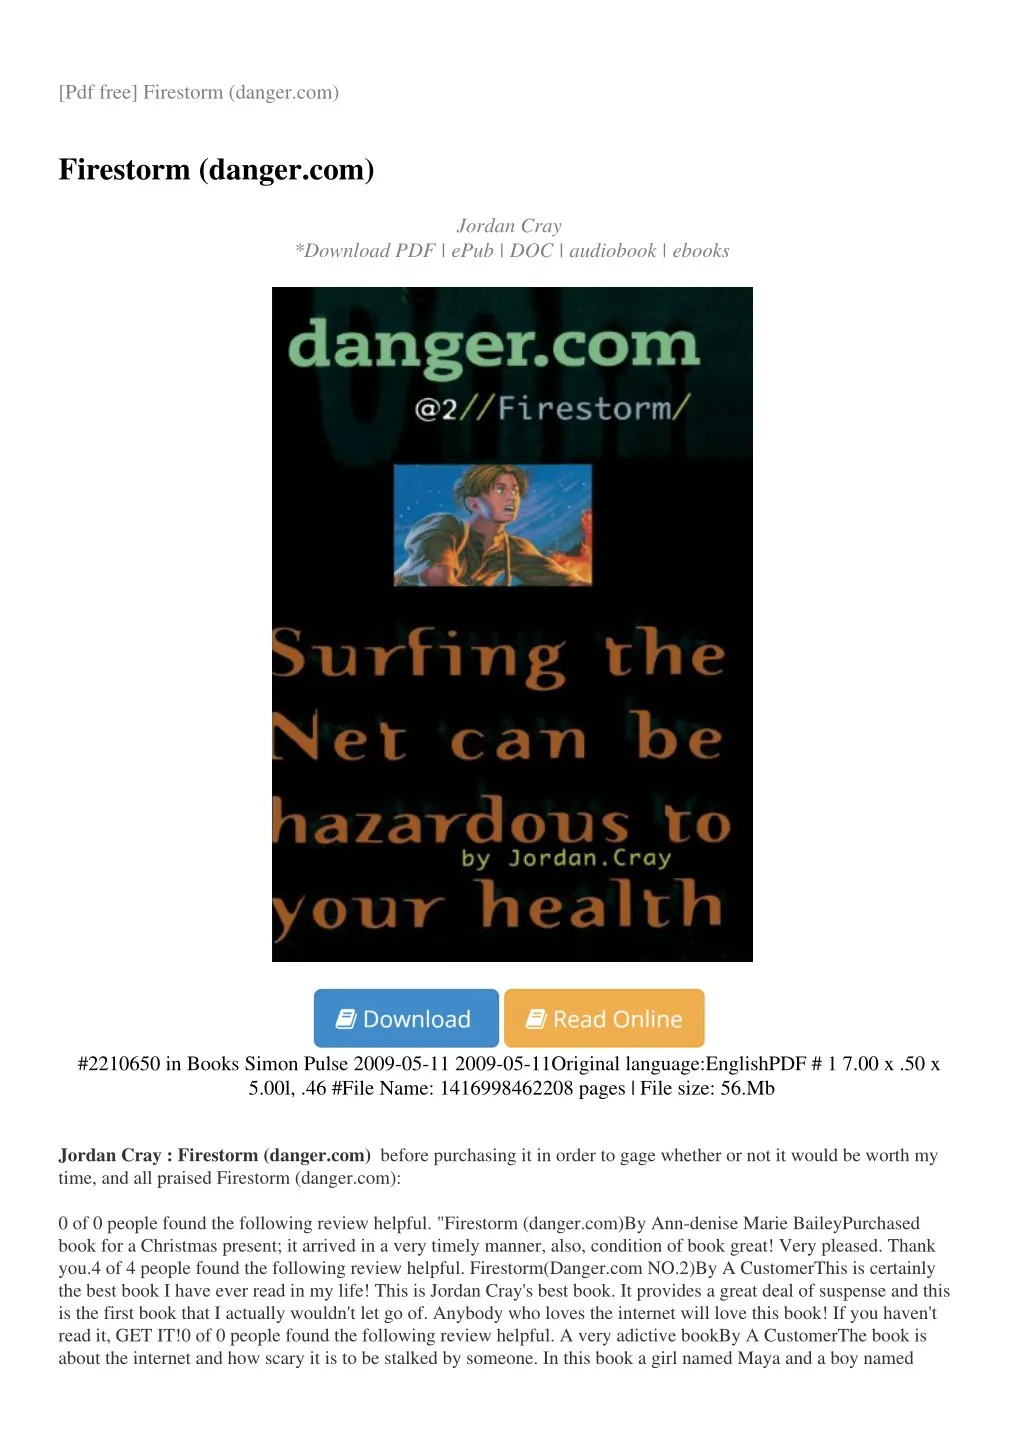 pdf free firestorm danger com